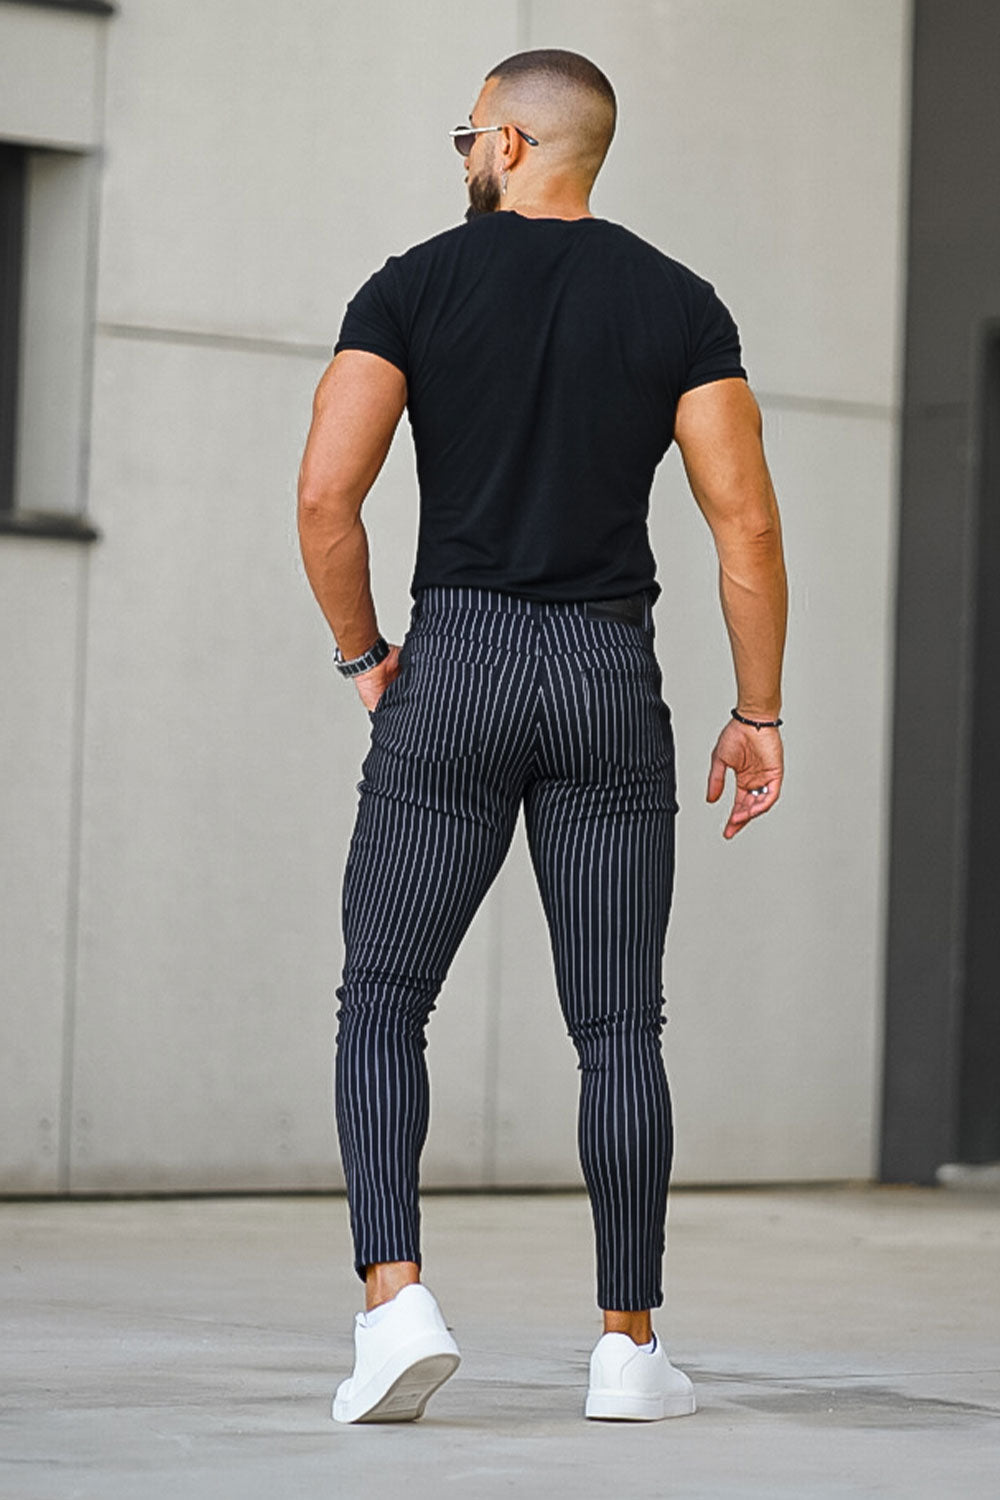 men's casual chinos pants